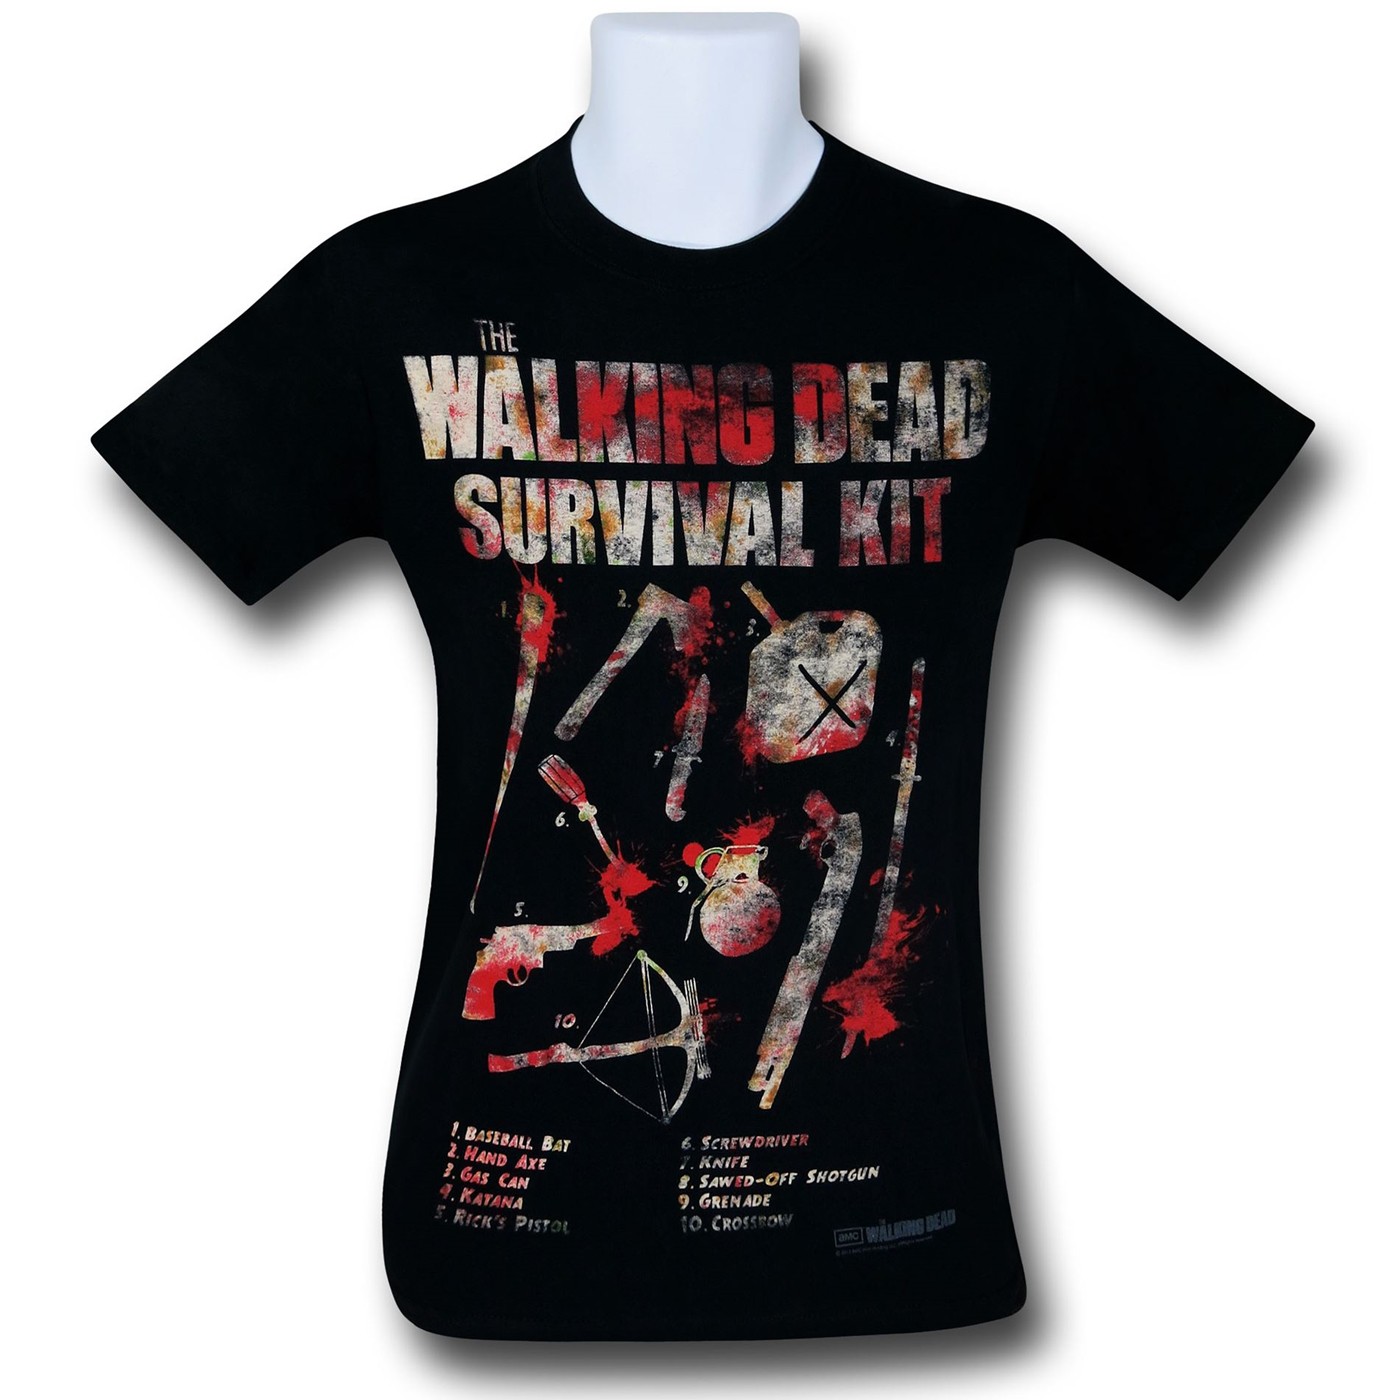 Walking Dead Survival Kit T-Shirt